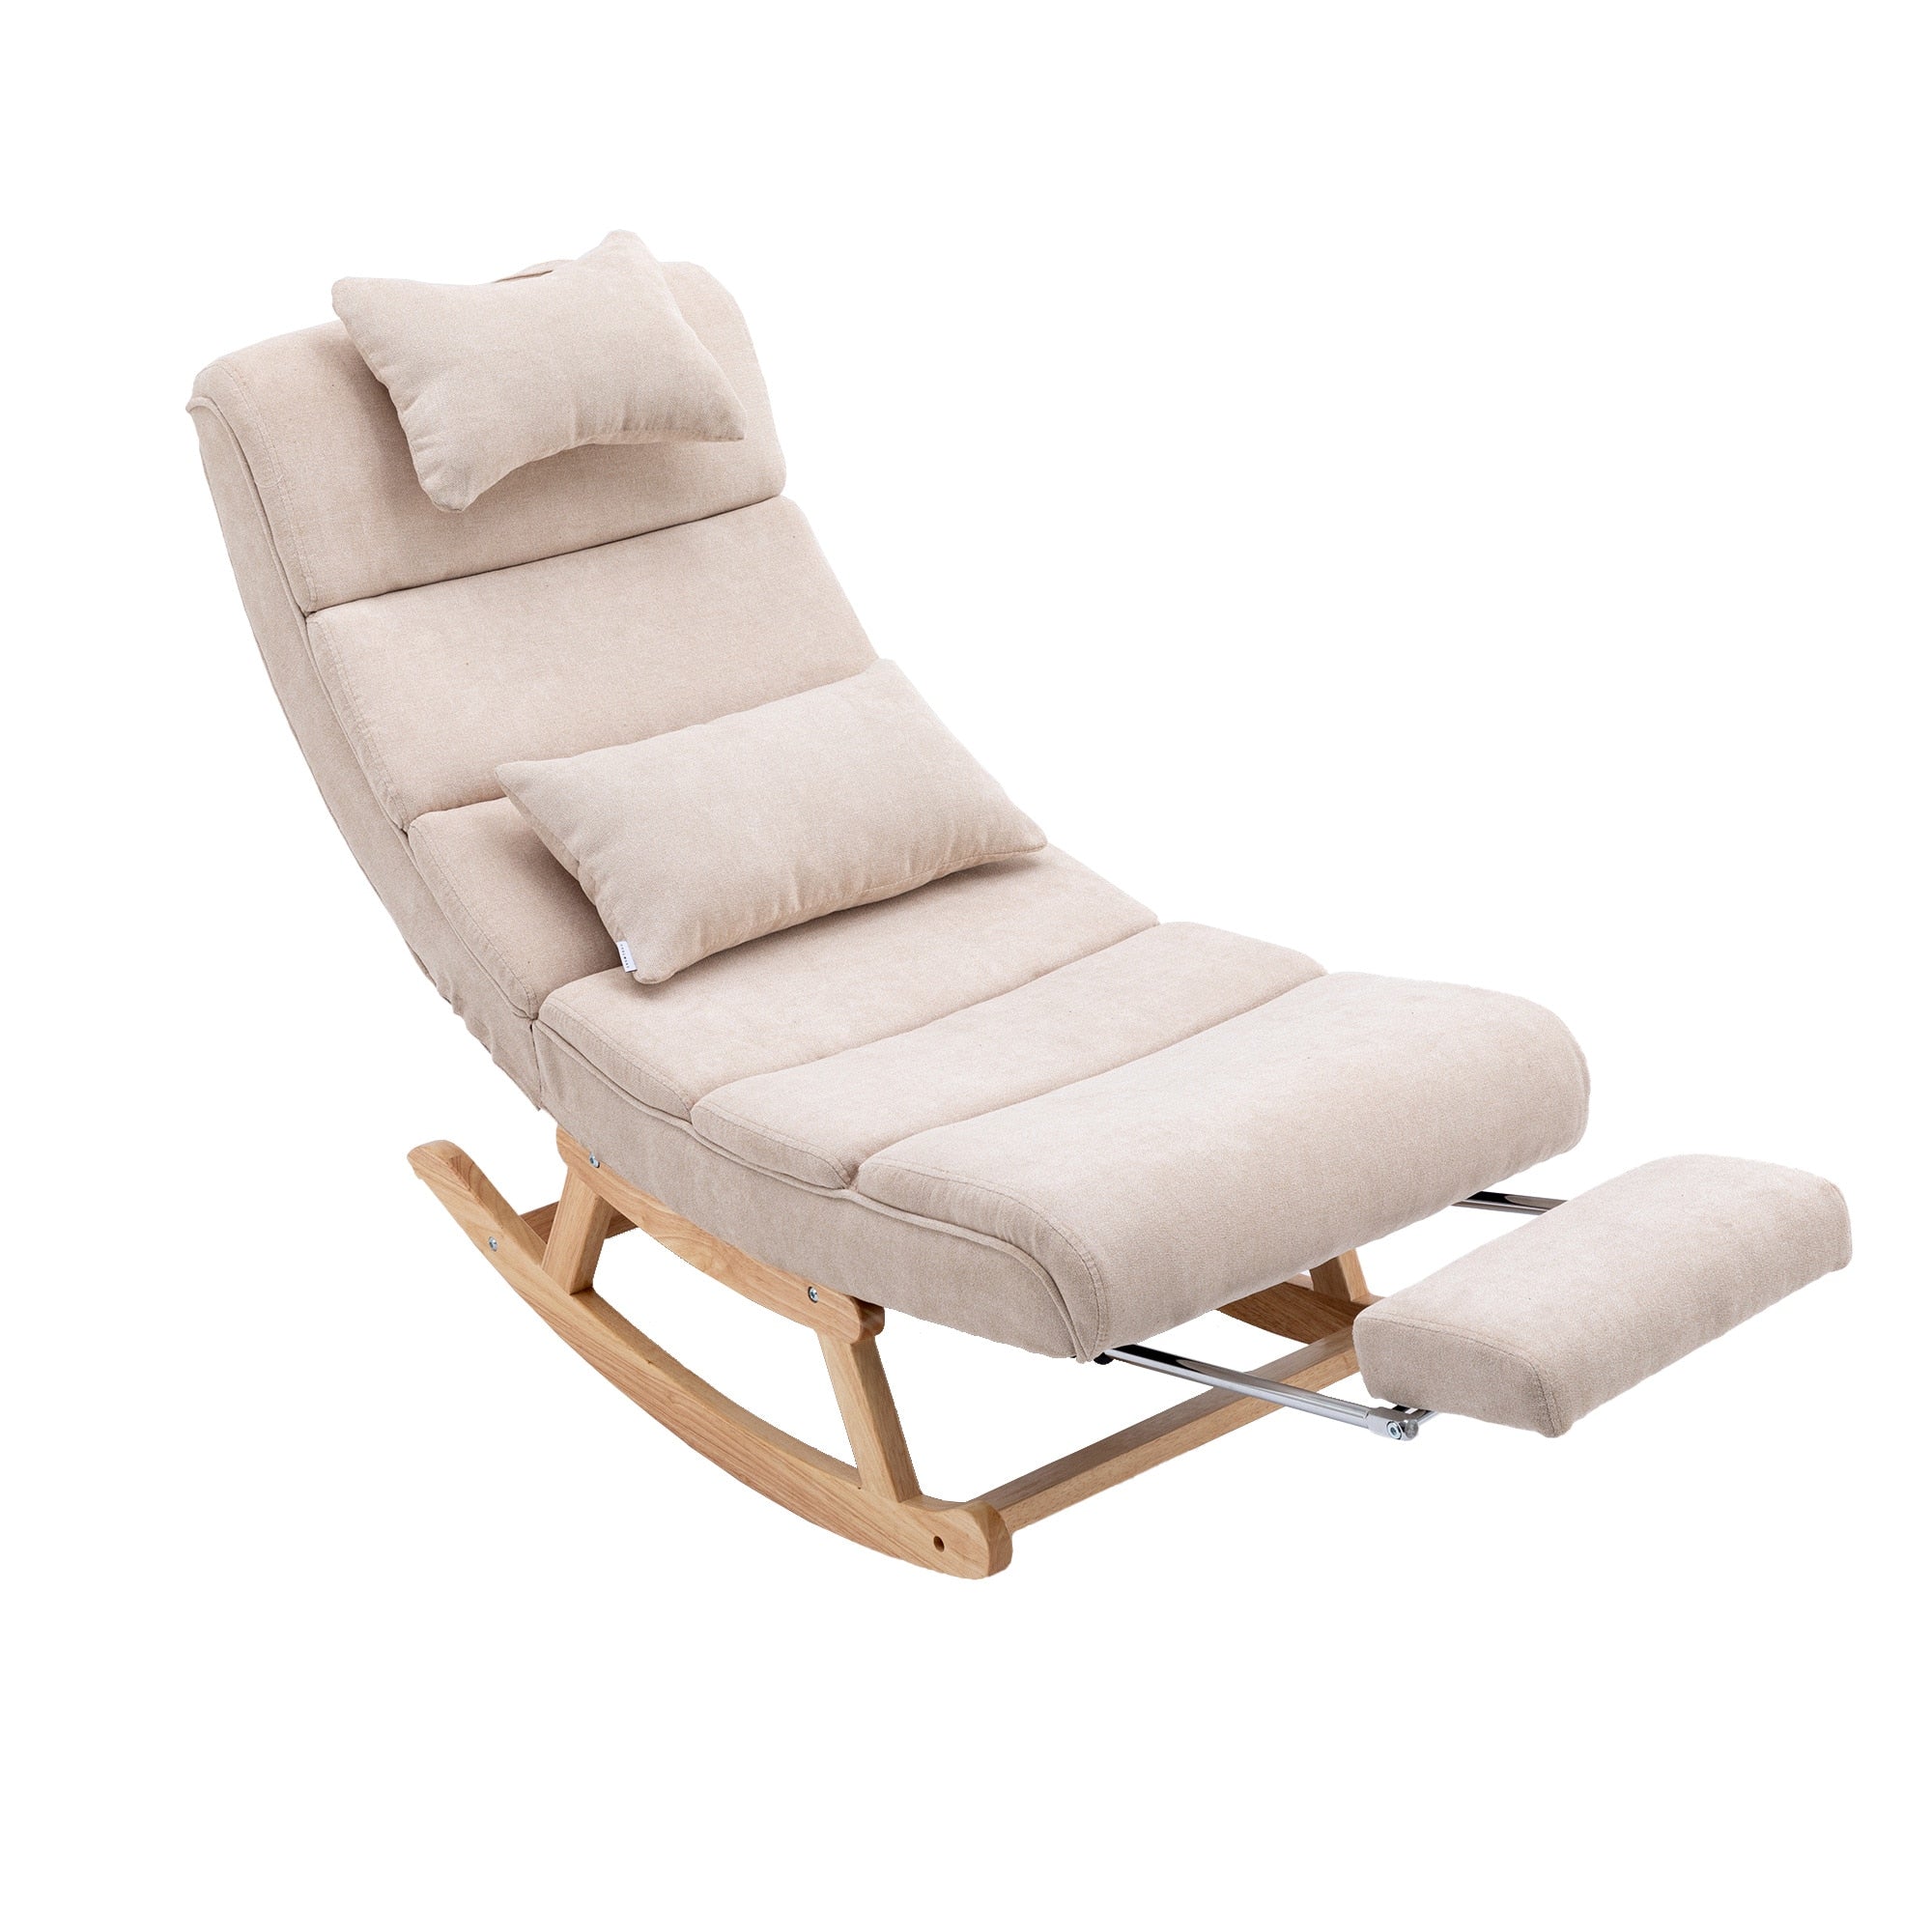 Homio Decor Living Room Beige / United States Modern Mid-Century Rocking Chair